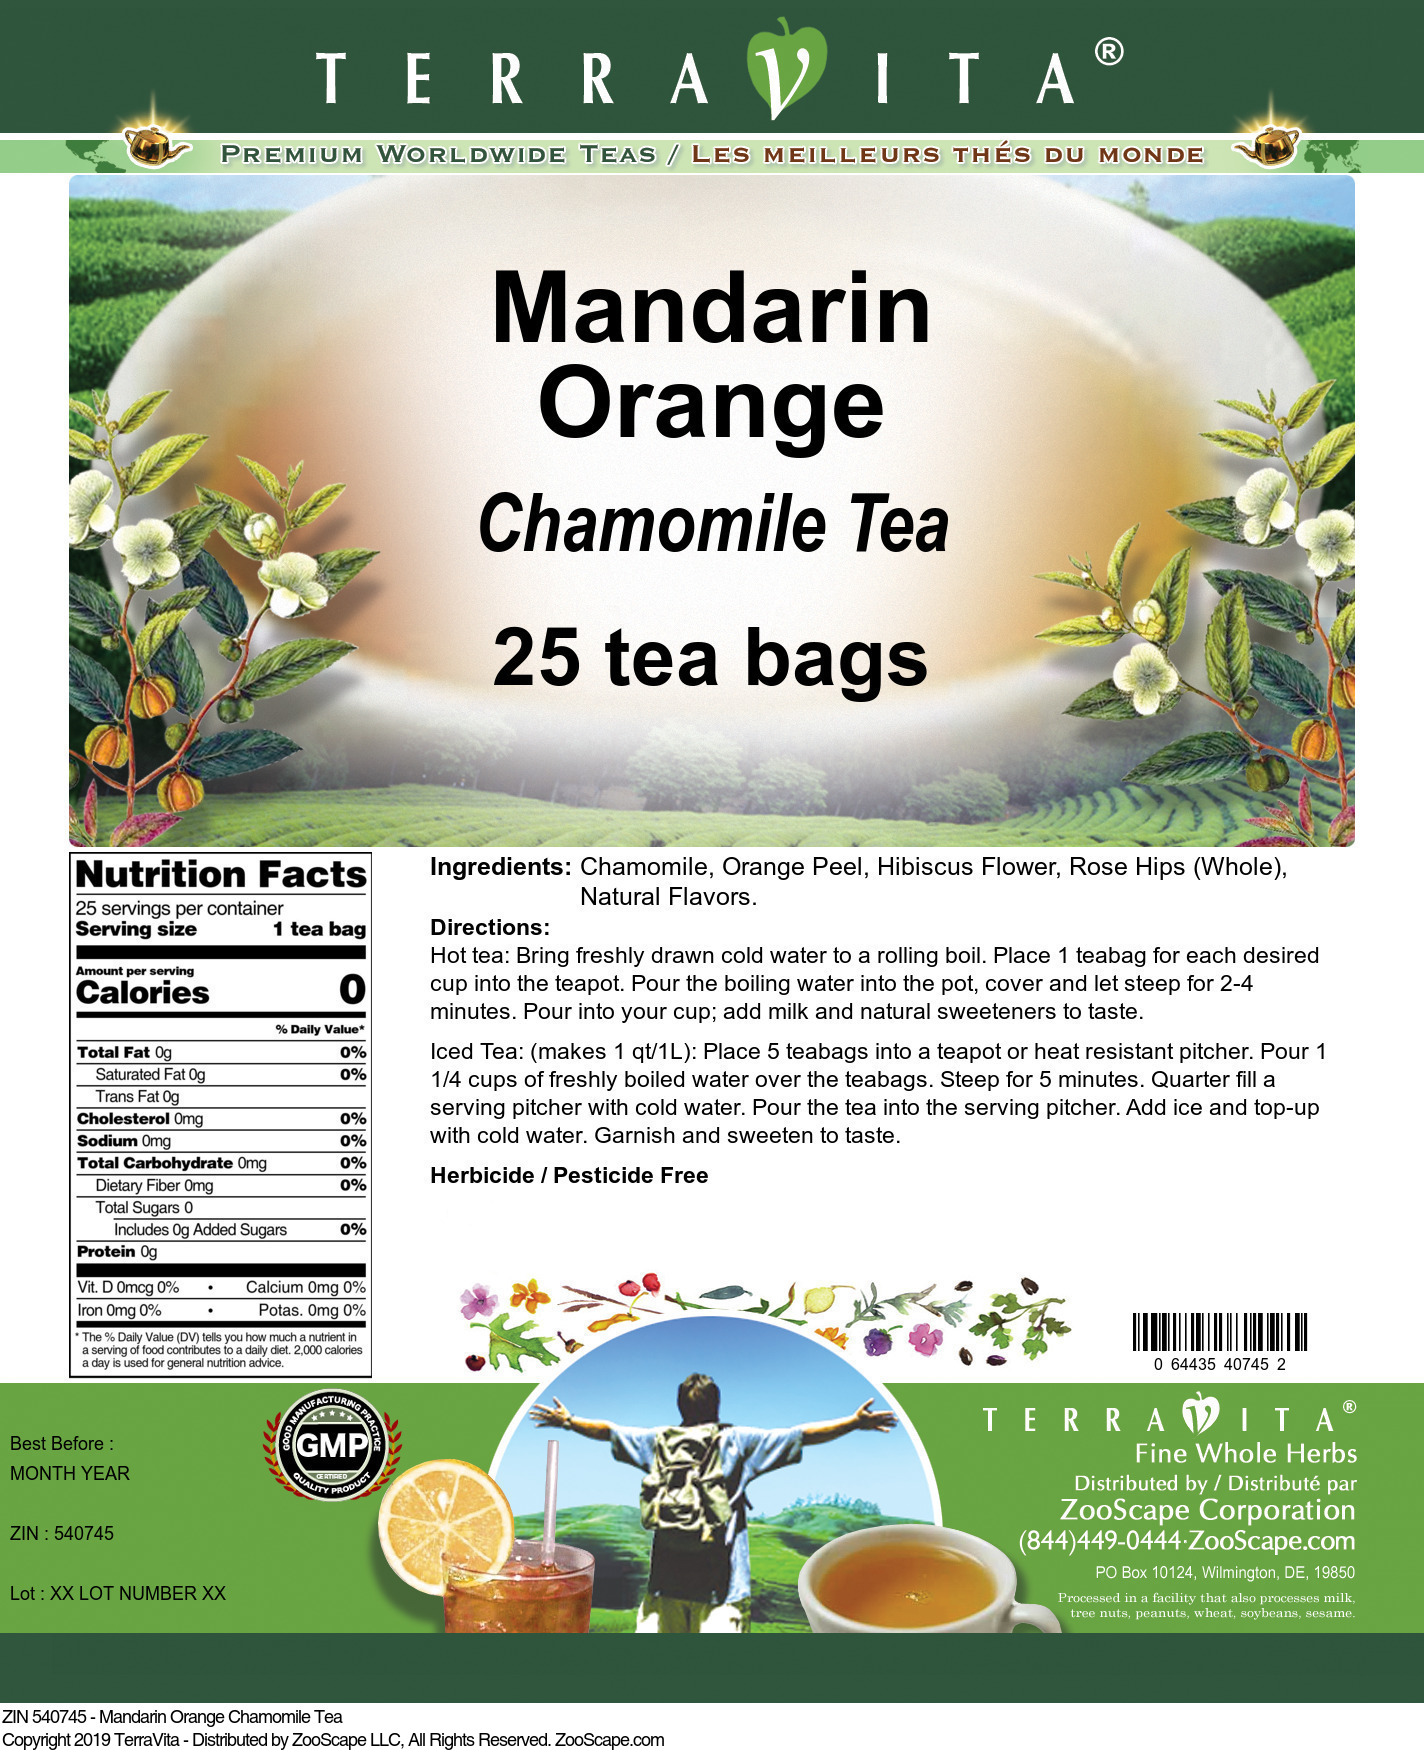 Mandarin Orange Chamomile Tea - Label